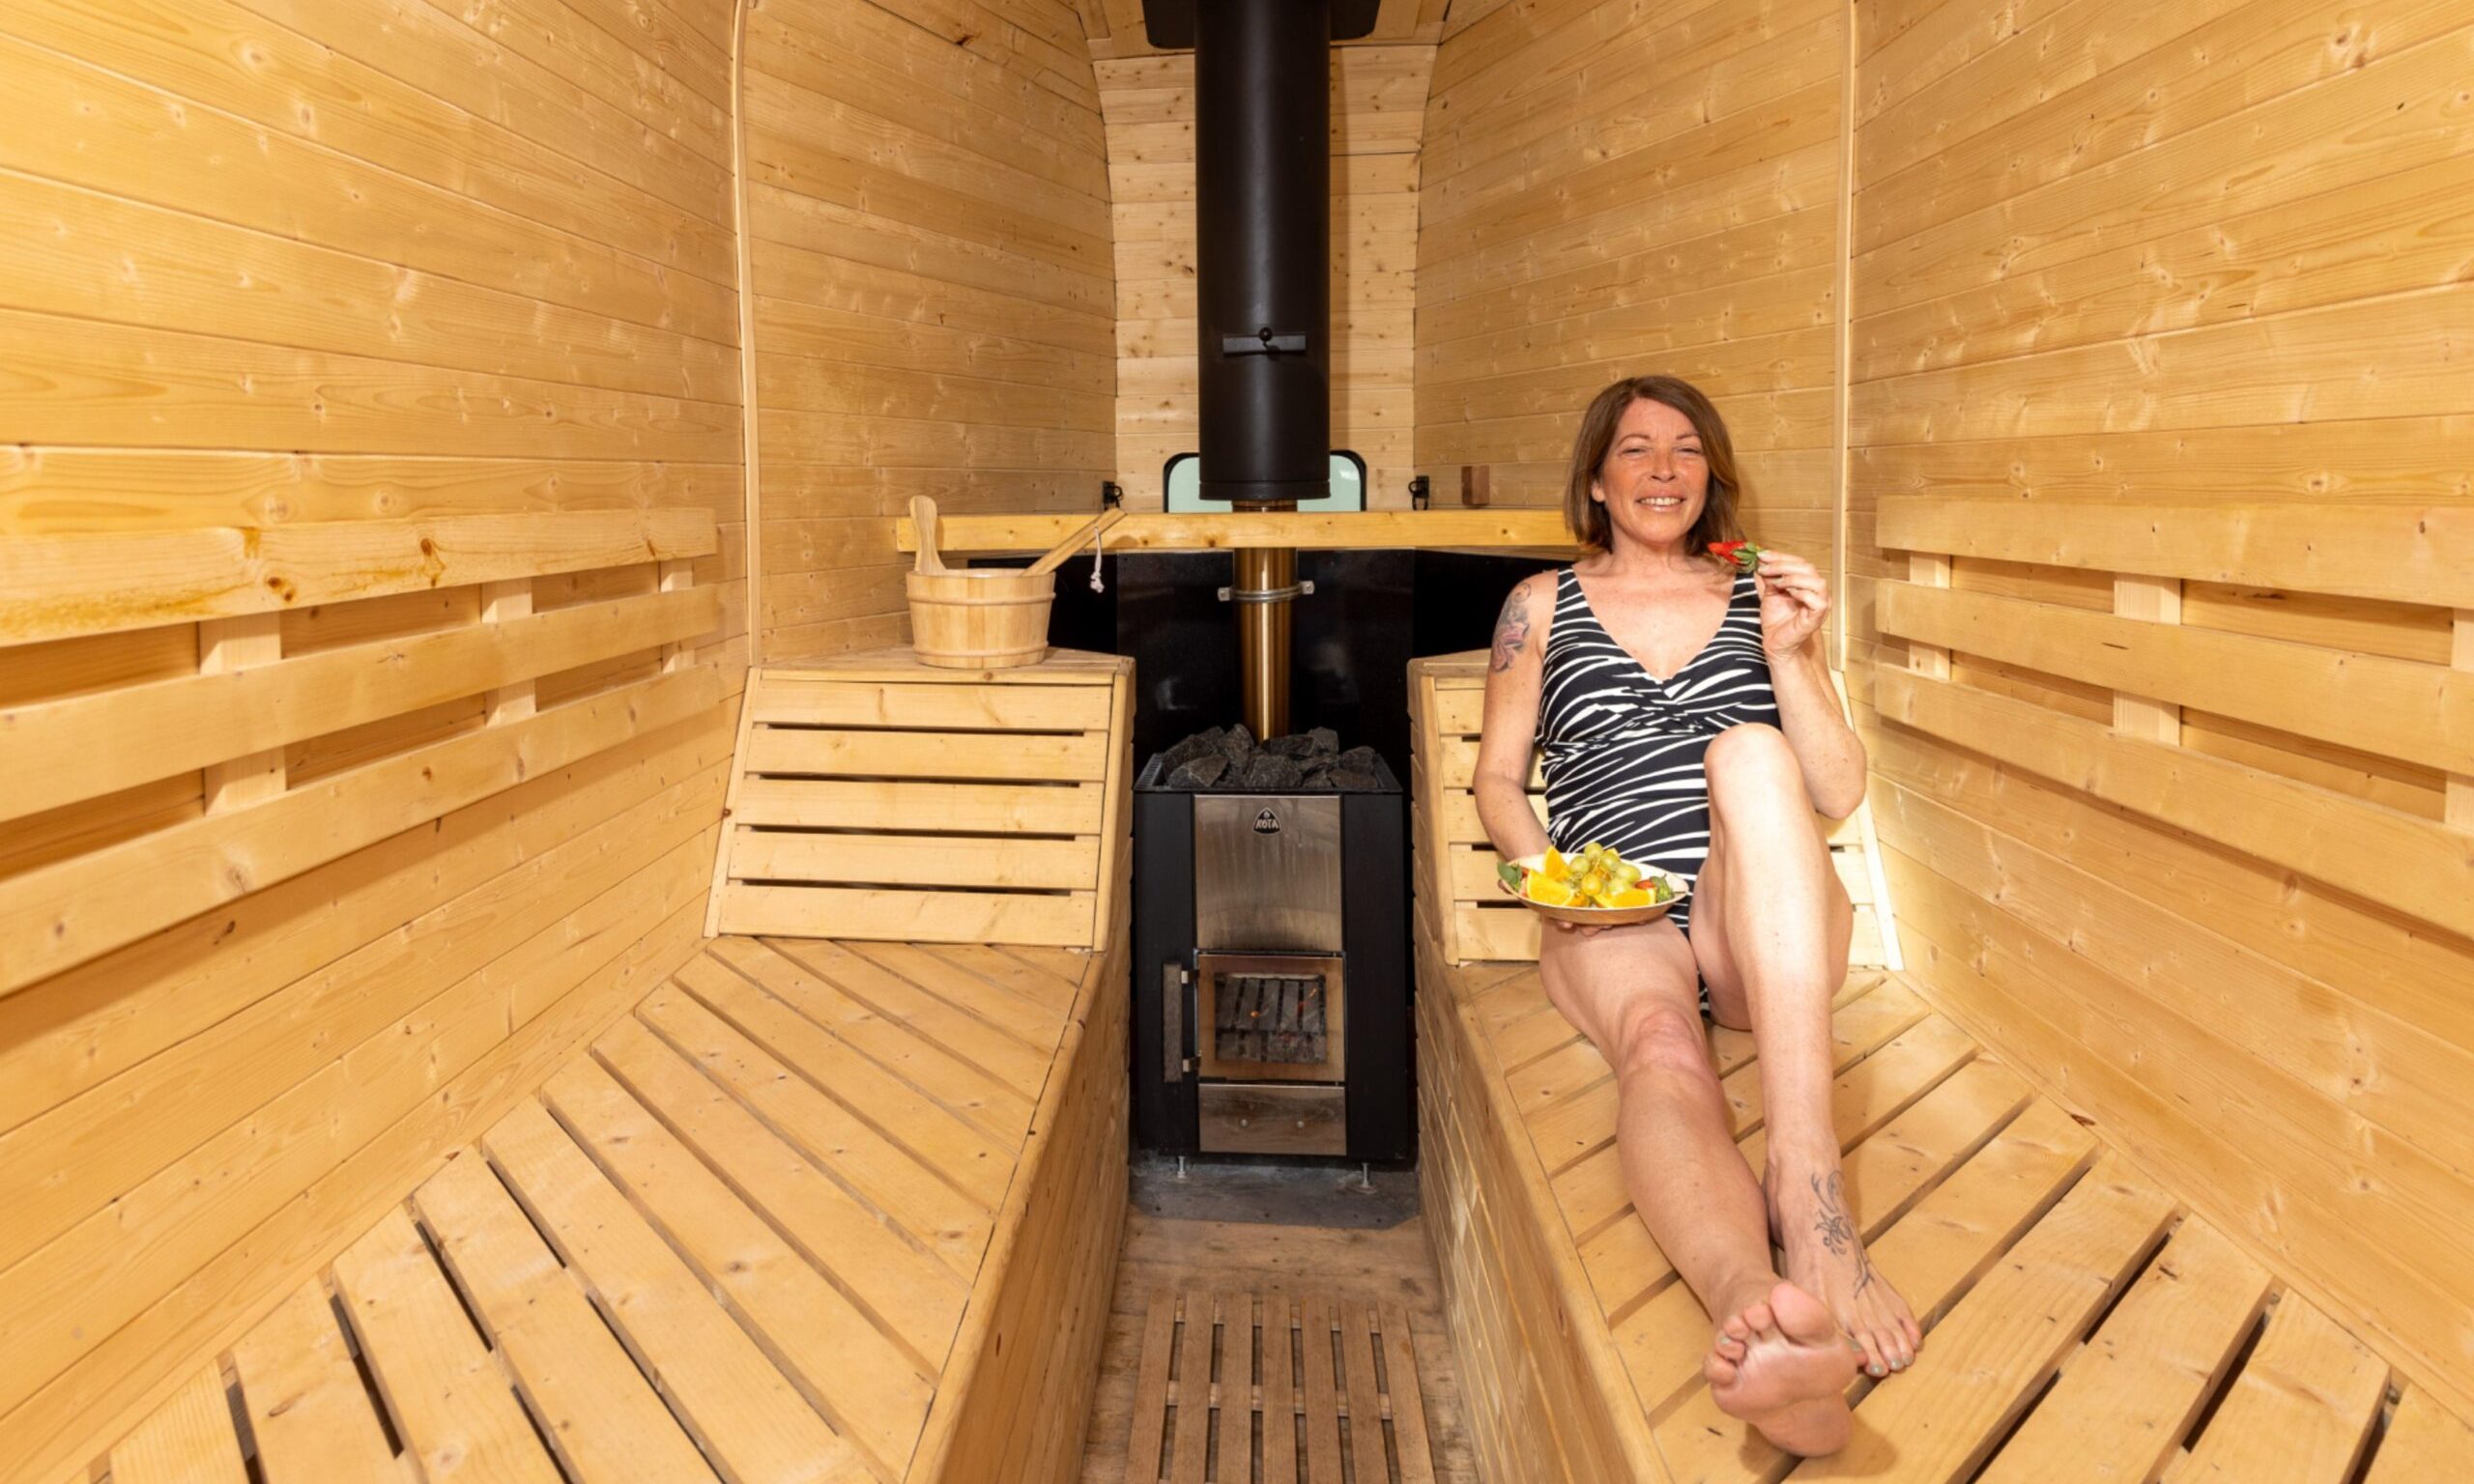 Debbie Thornton has opened up a horsebox sauna at Aberdeen Beach.